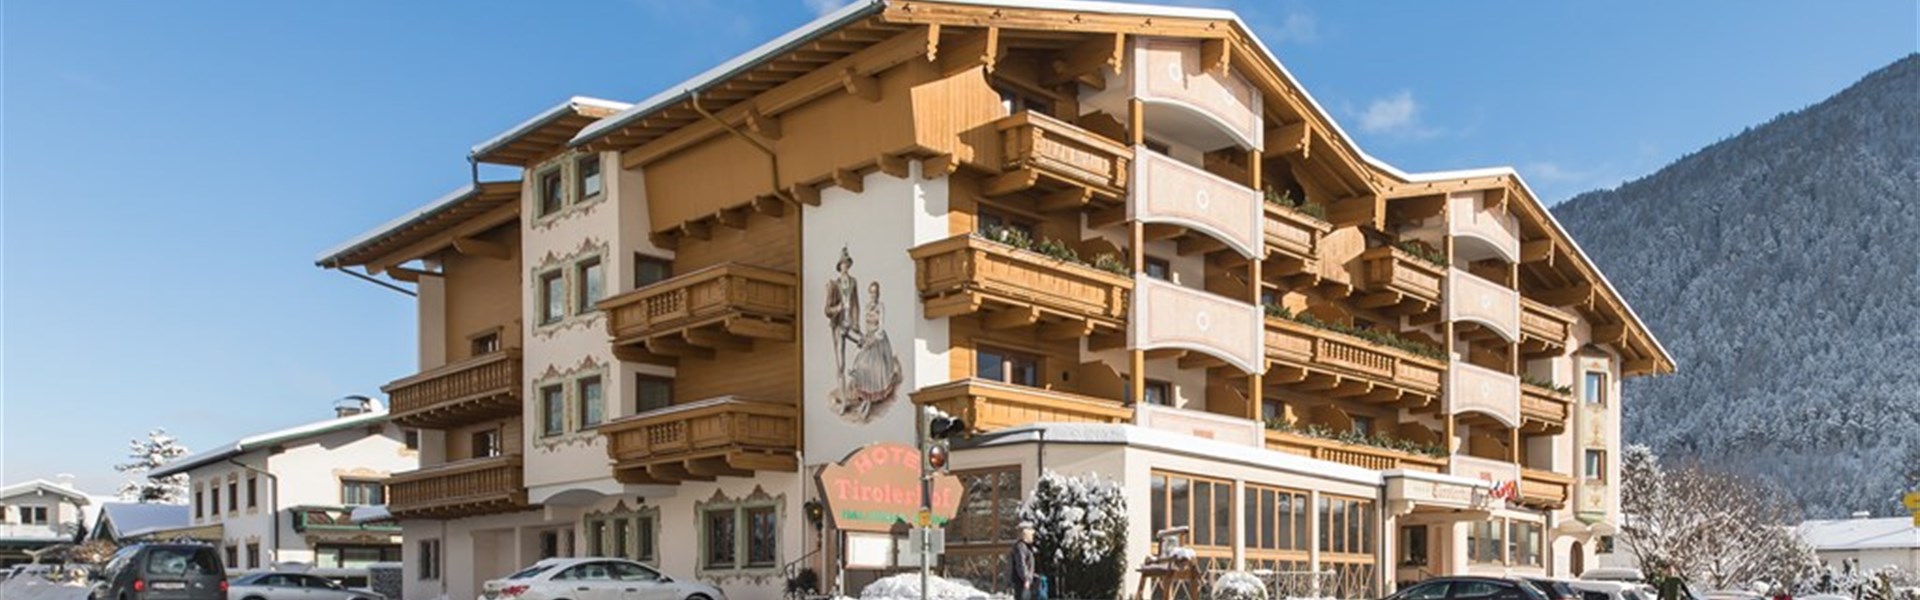 Marco Polo - Hotel Der Tirolerhof (W) - 